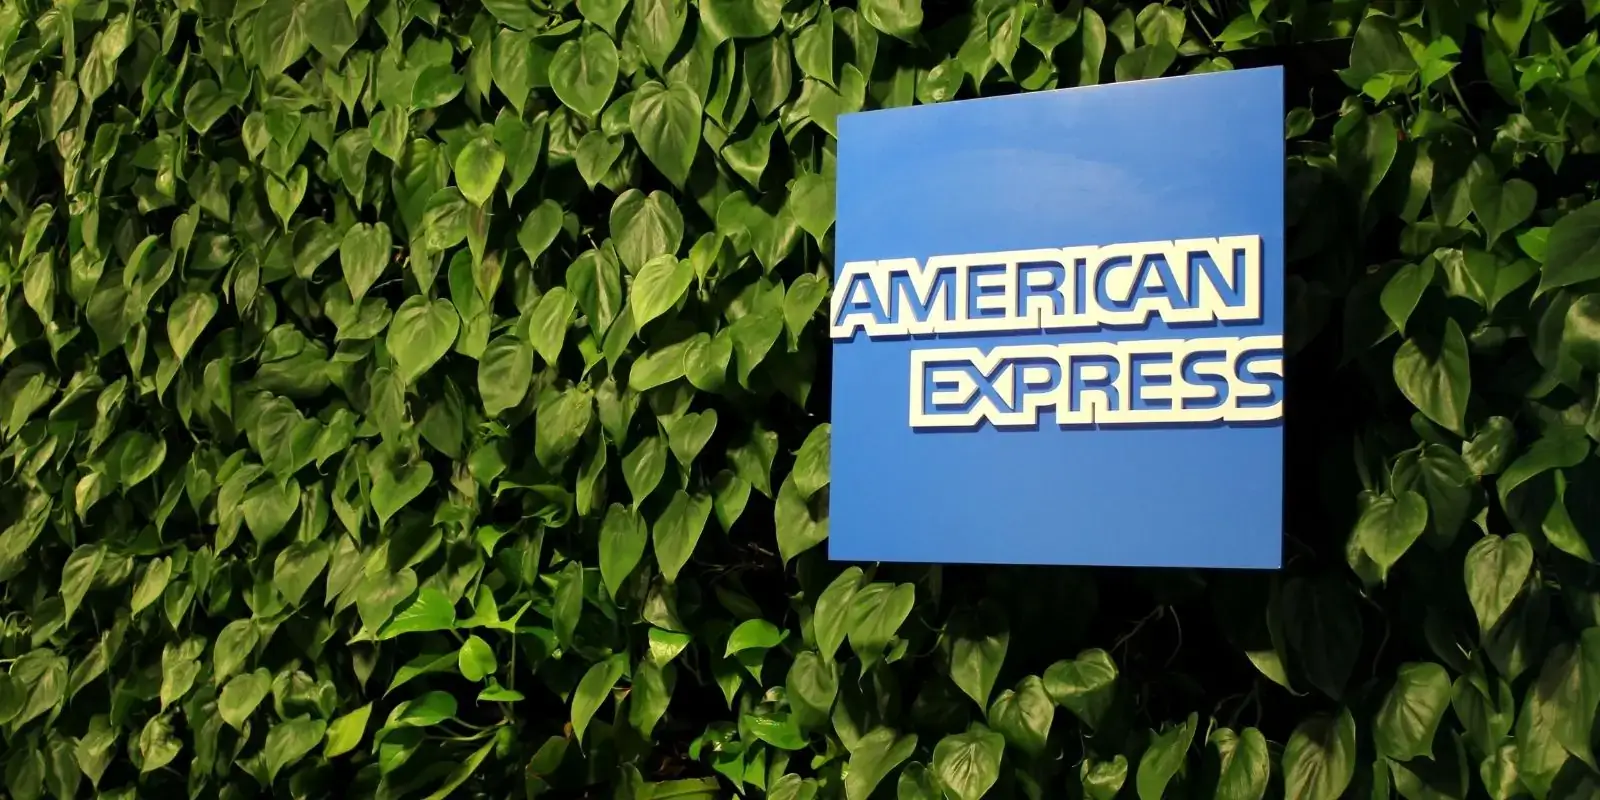 American Express Recruitment 2023